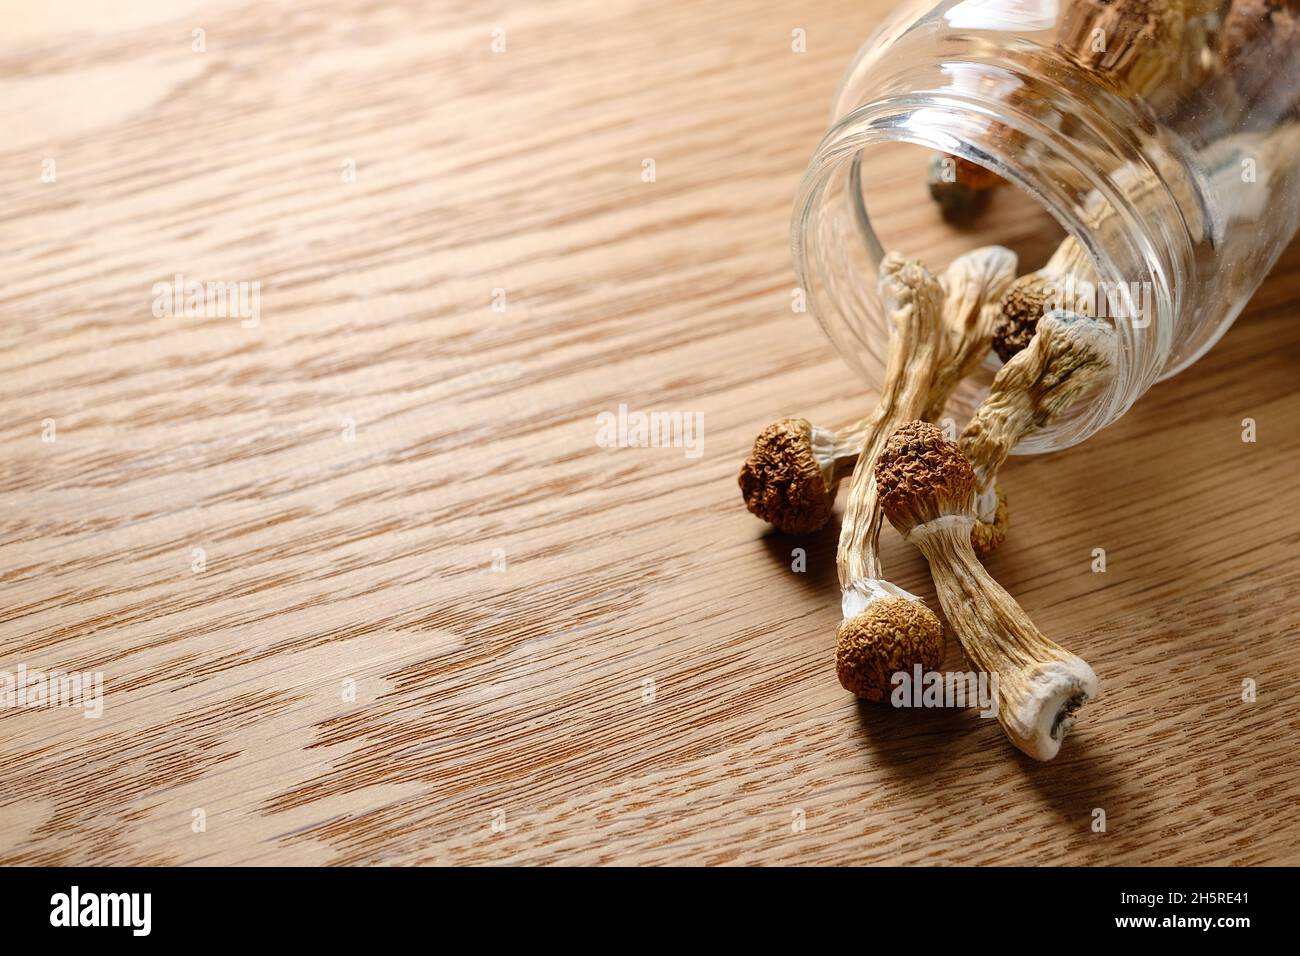 Psilocybin mushrooms close-up. Dried psilocybe cubensis on wooden background. Magic shrooms Golden Teacher, psychotropic therapy. Stock Photo